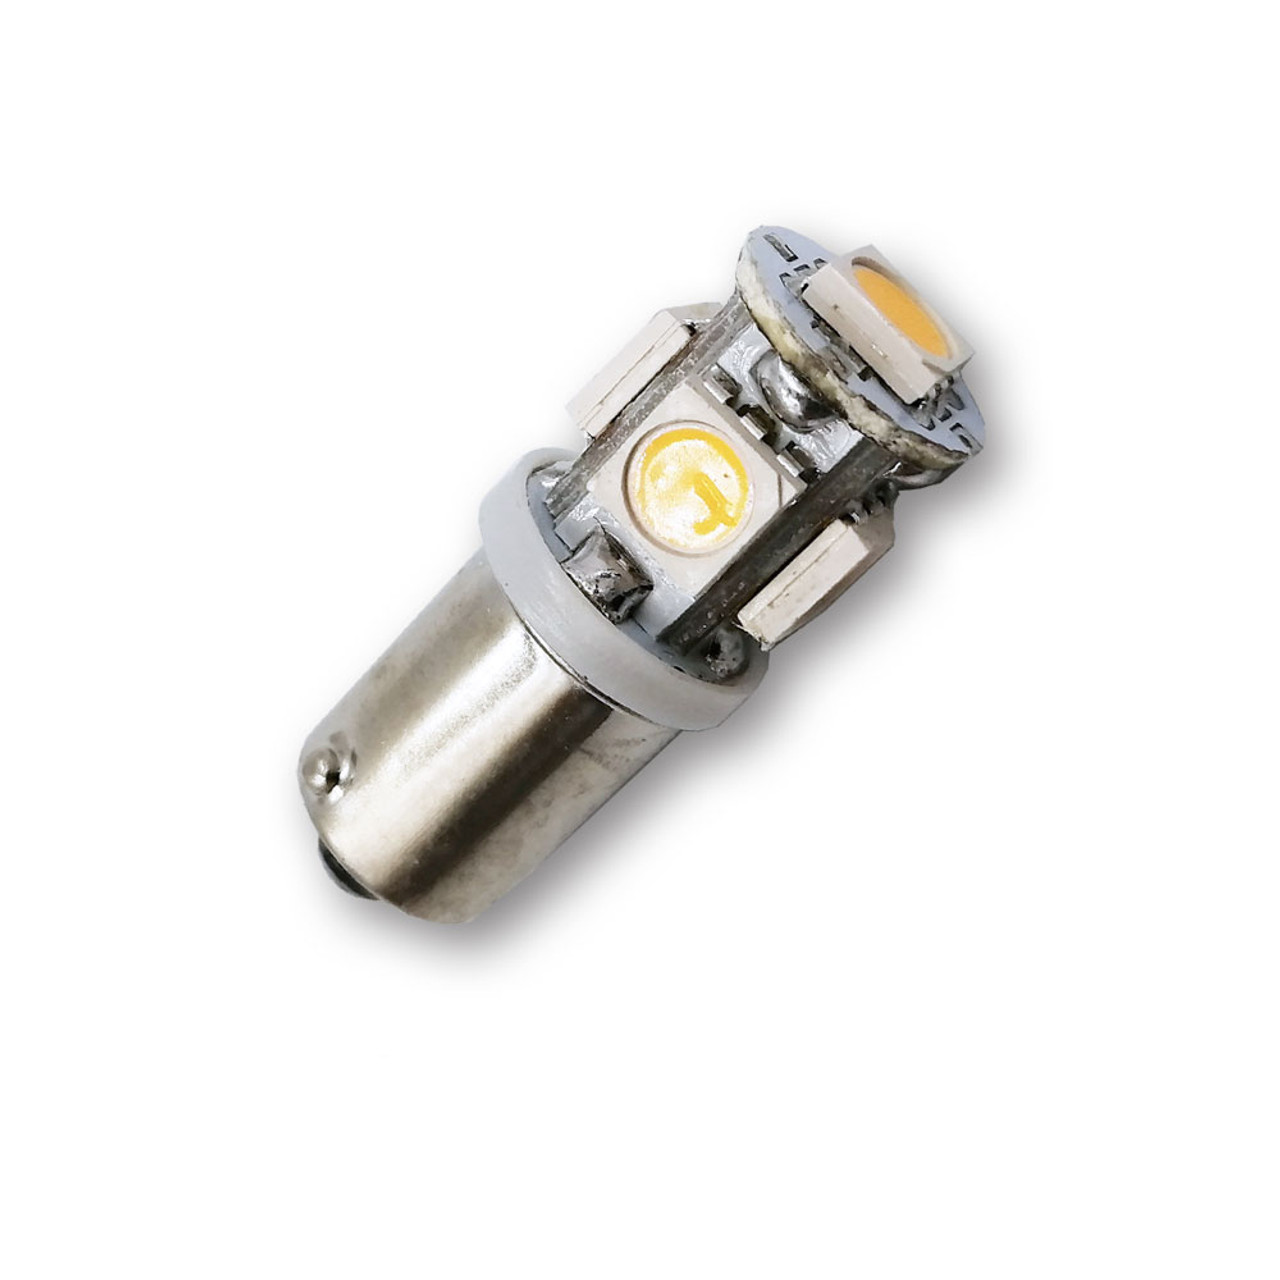 Mega LED - LED Replacement Bulb - BA9S Type, 1.0 Watt, 80 Lumens, 3000K,  Warm White - Apollo Lighting